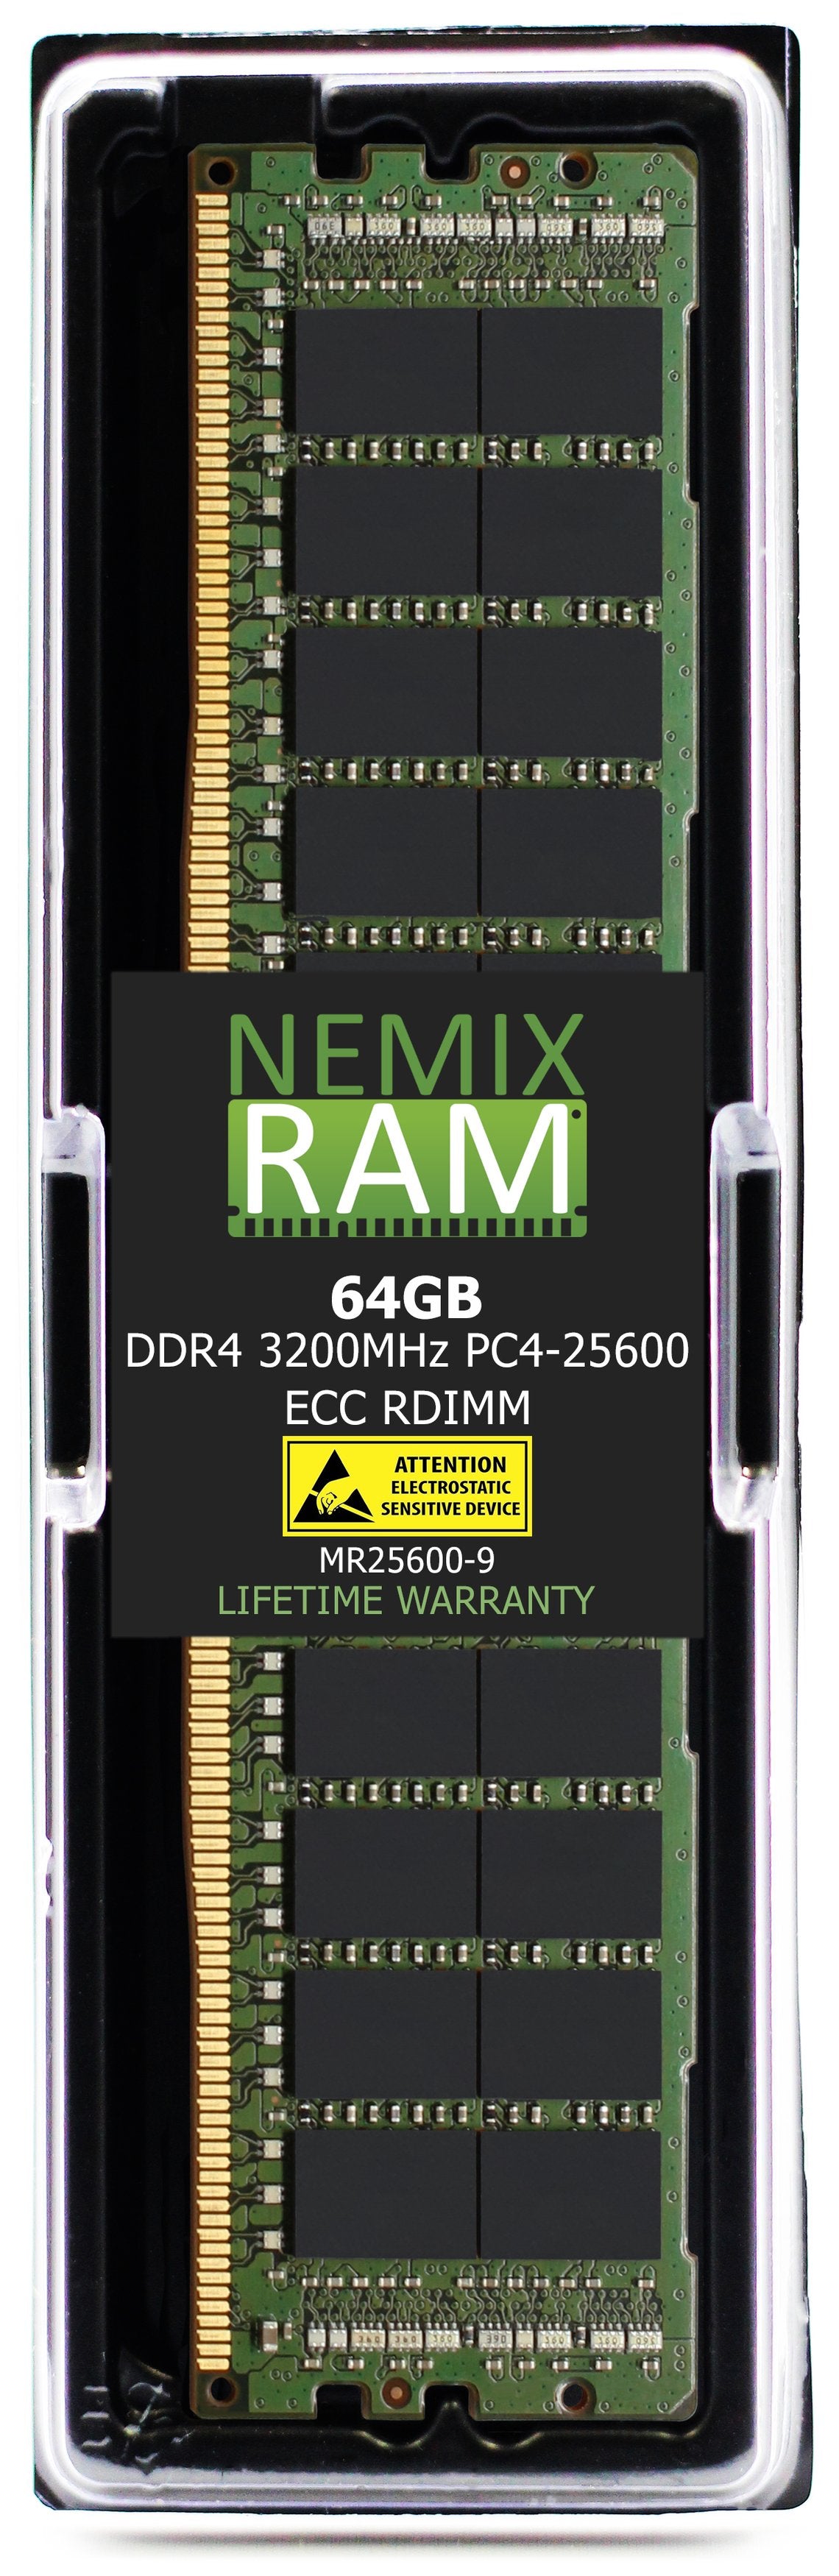 64GB DDR4 3200MHZ PC4-25600 RDIMM Compatible with Supermicro MEM-DR464L-HL02-ER32